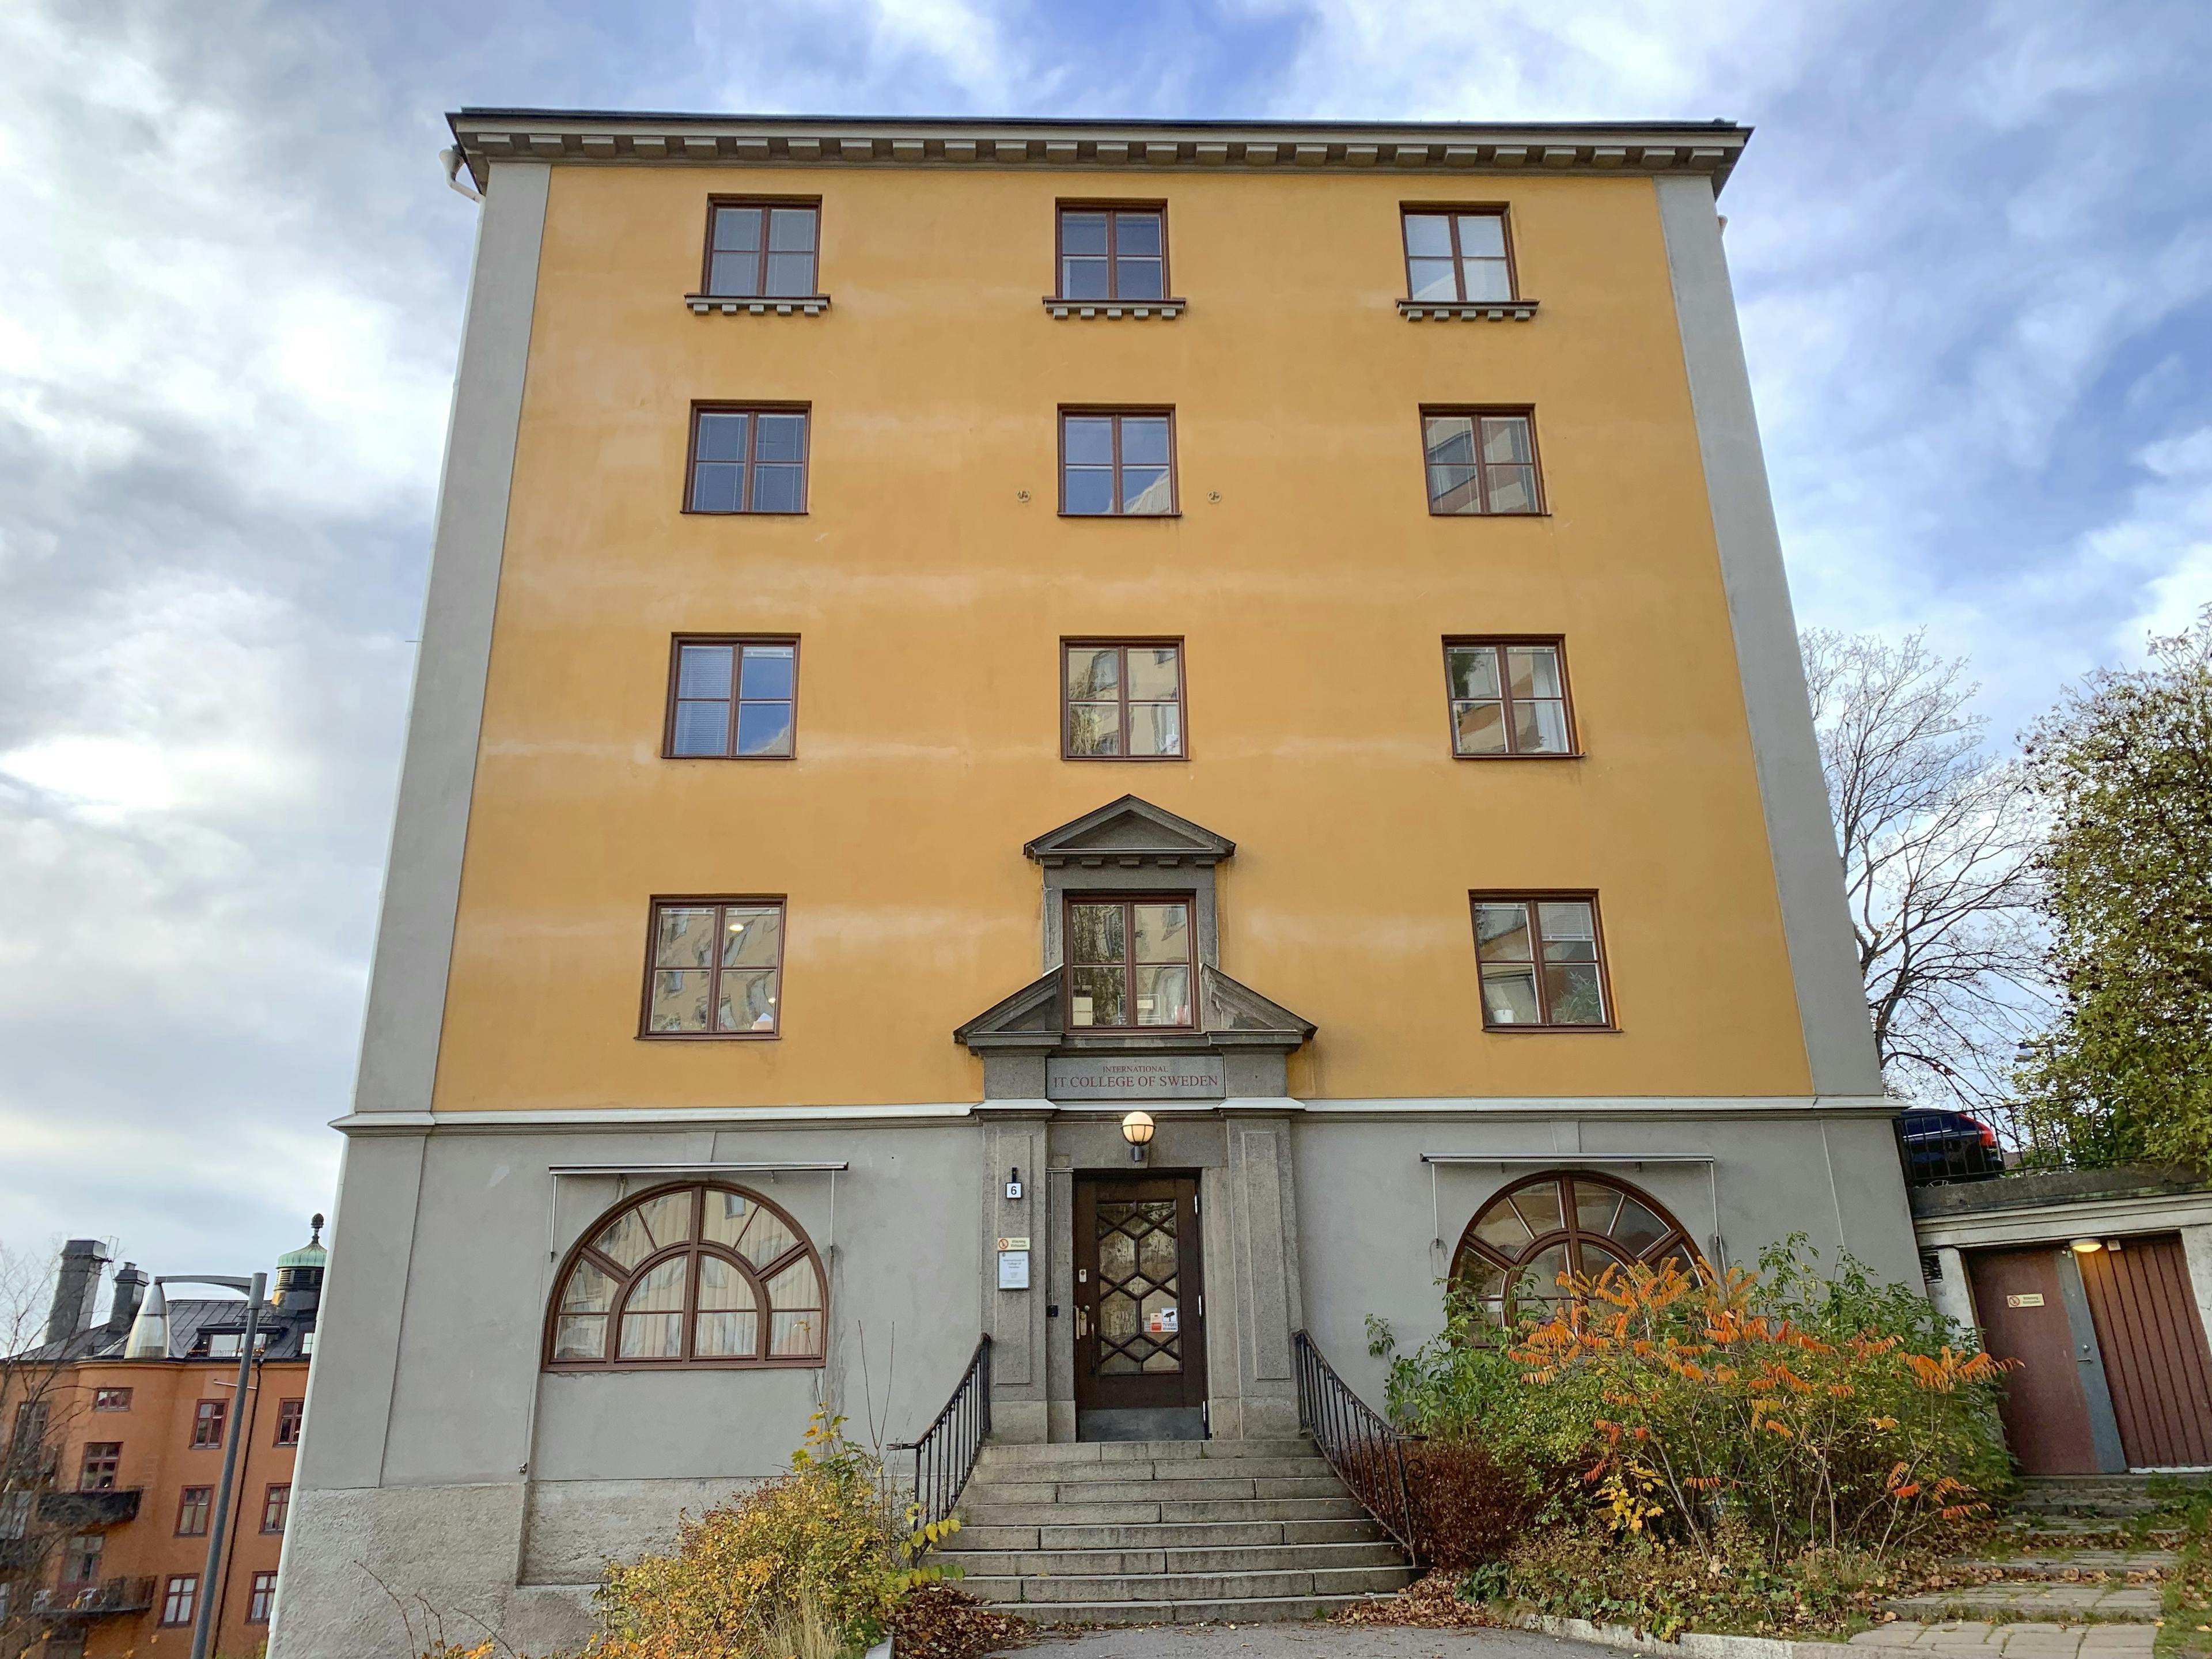  International IT College of Swedens (INIT College) skolbyggnad.